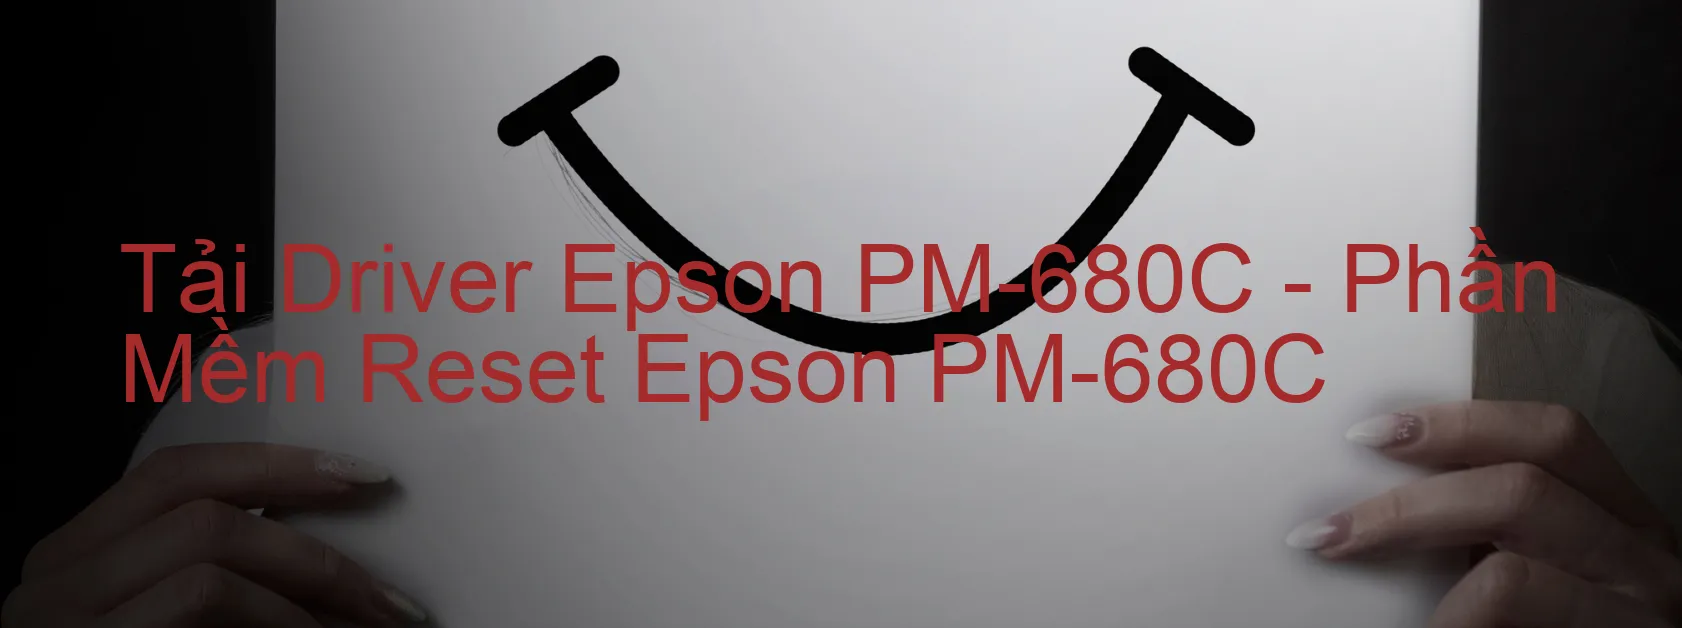 Driver Epson PM-680C, Phần Mềm Reset Epson PM-680C